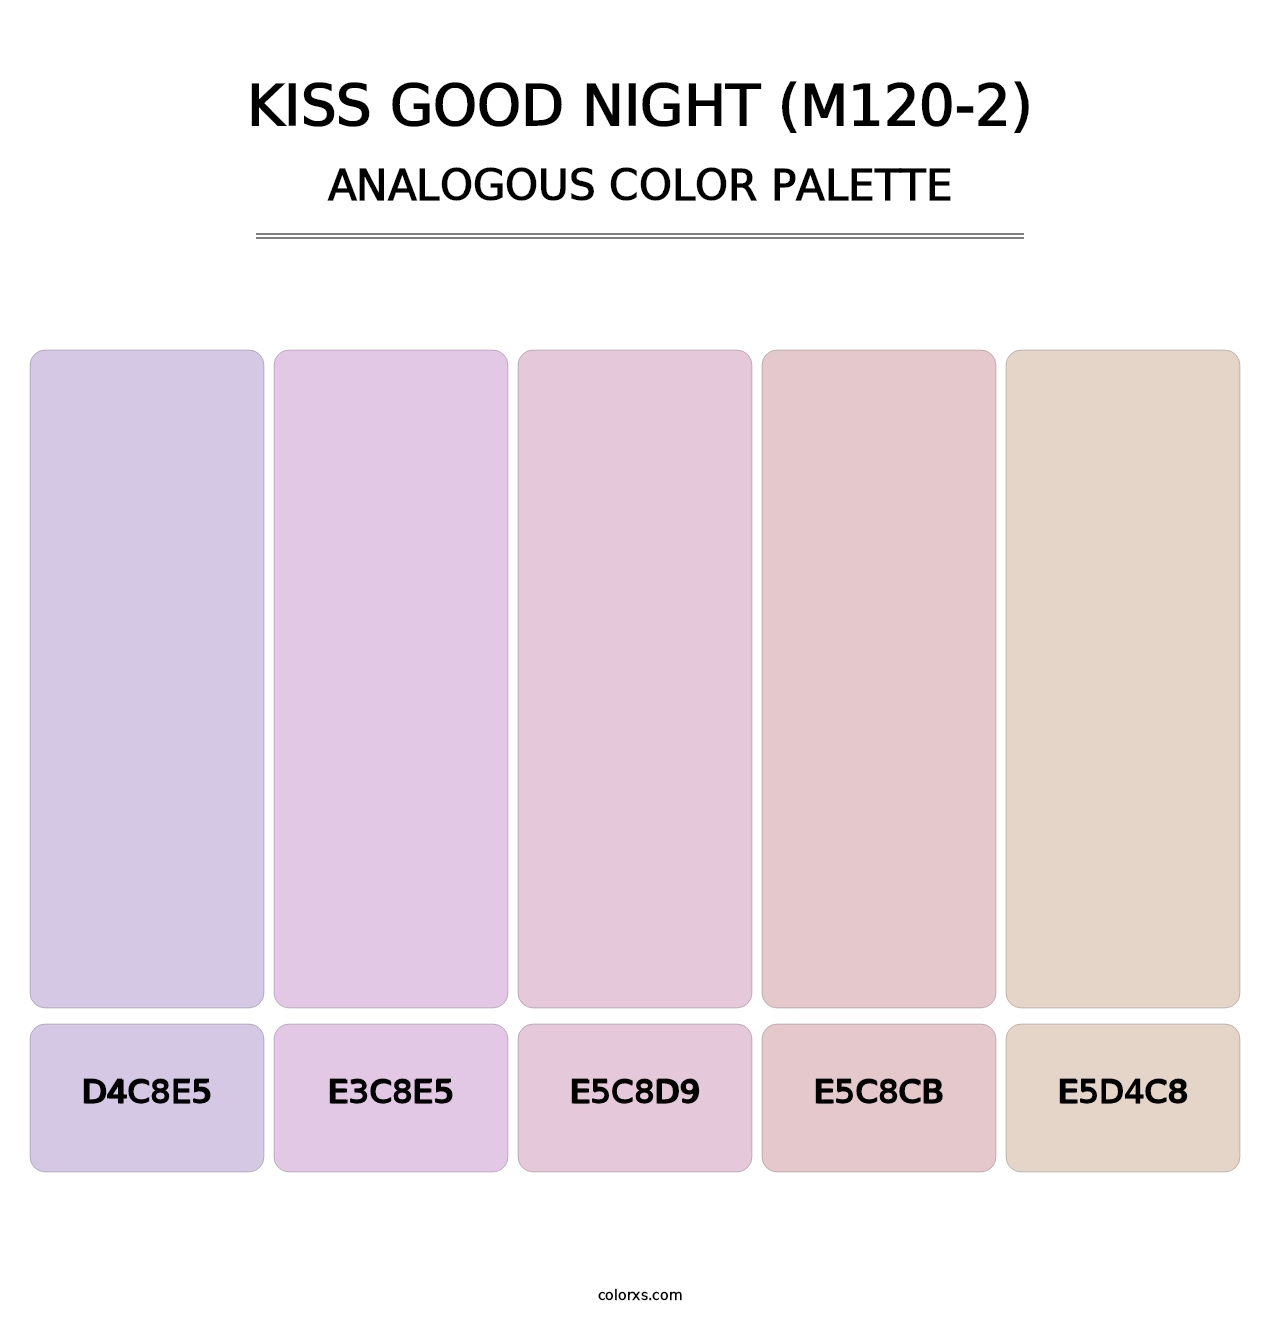 Kiss Good Night (M120-2) - Analogous Color Palette